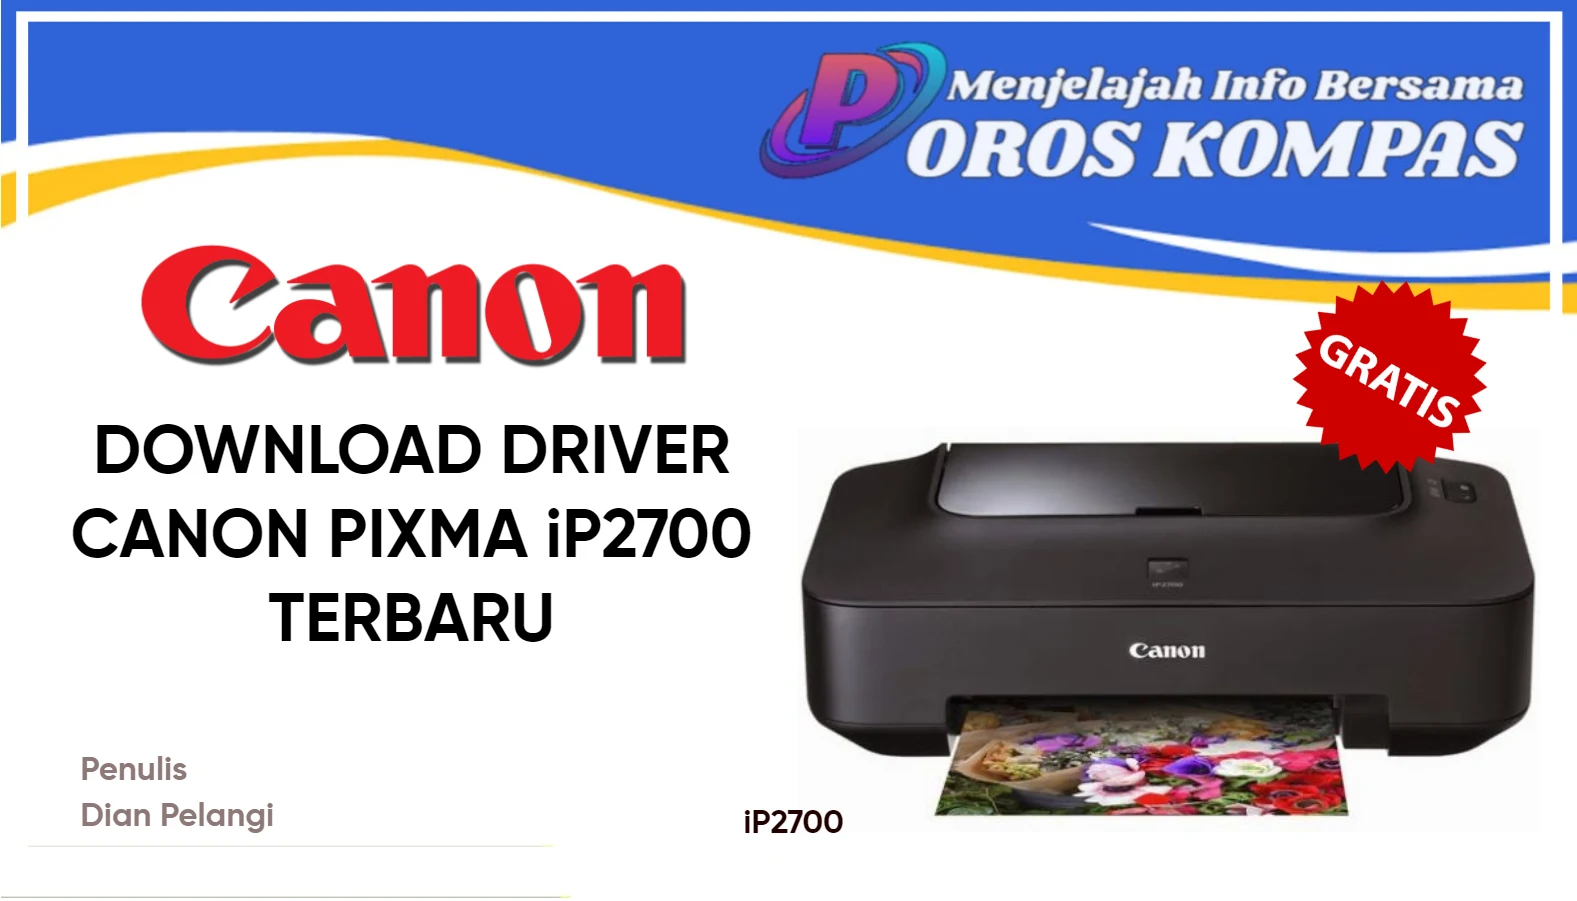 Gratis Download Driver Canon Pixma iP2700 Terbaru